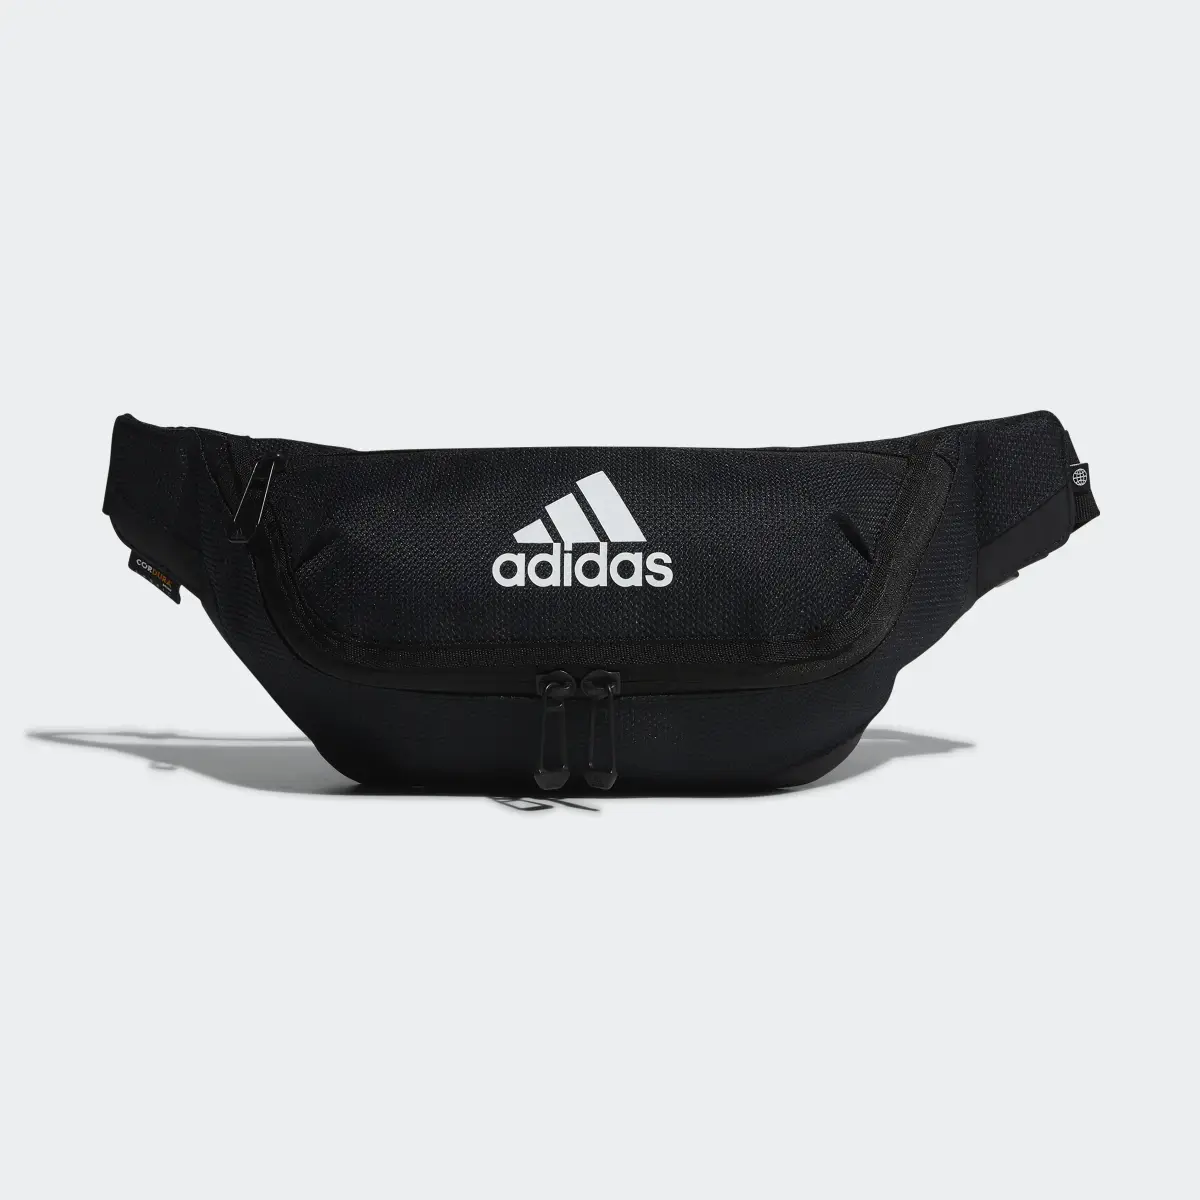 Adidas Endurance Packing System Waist Bag. 2